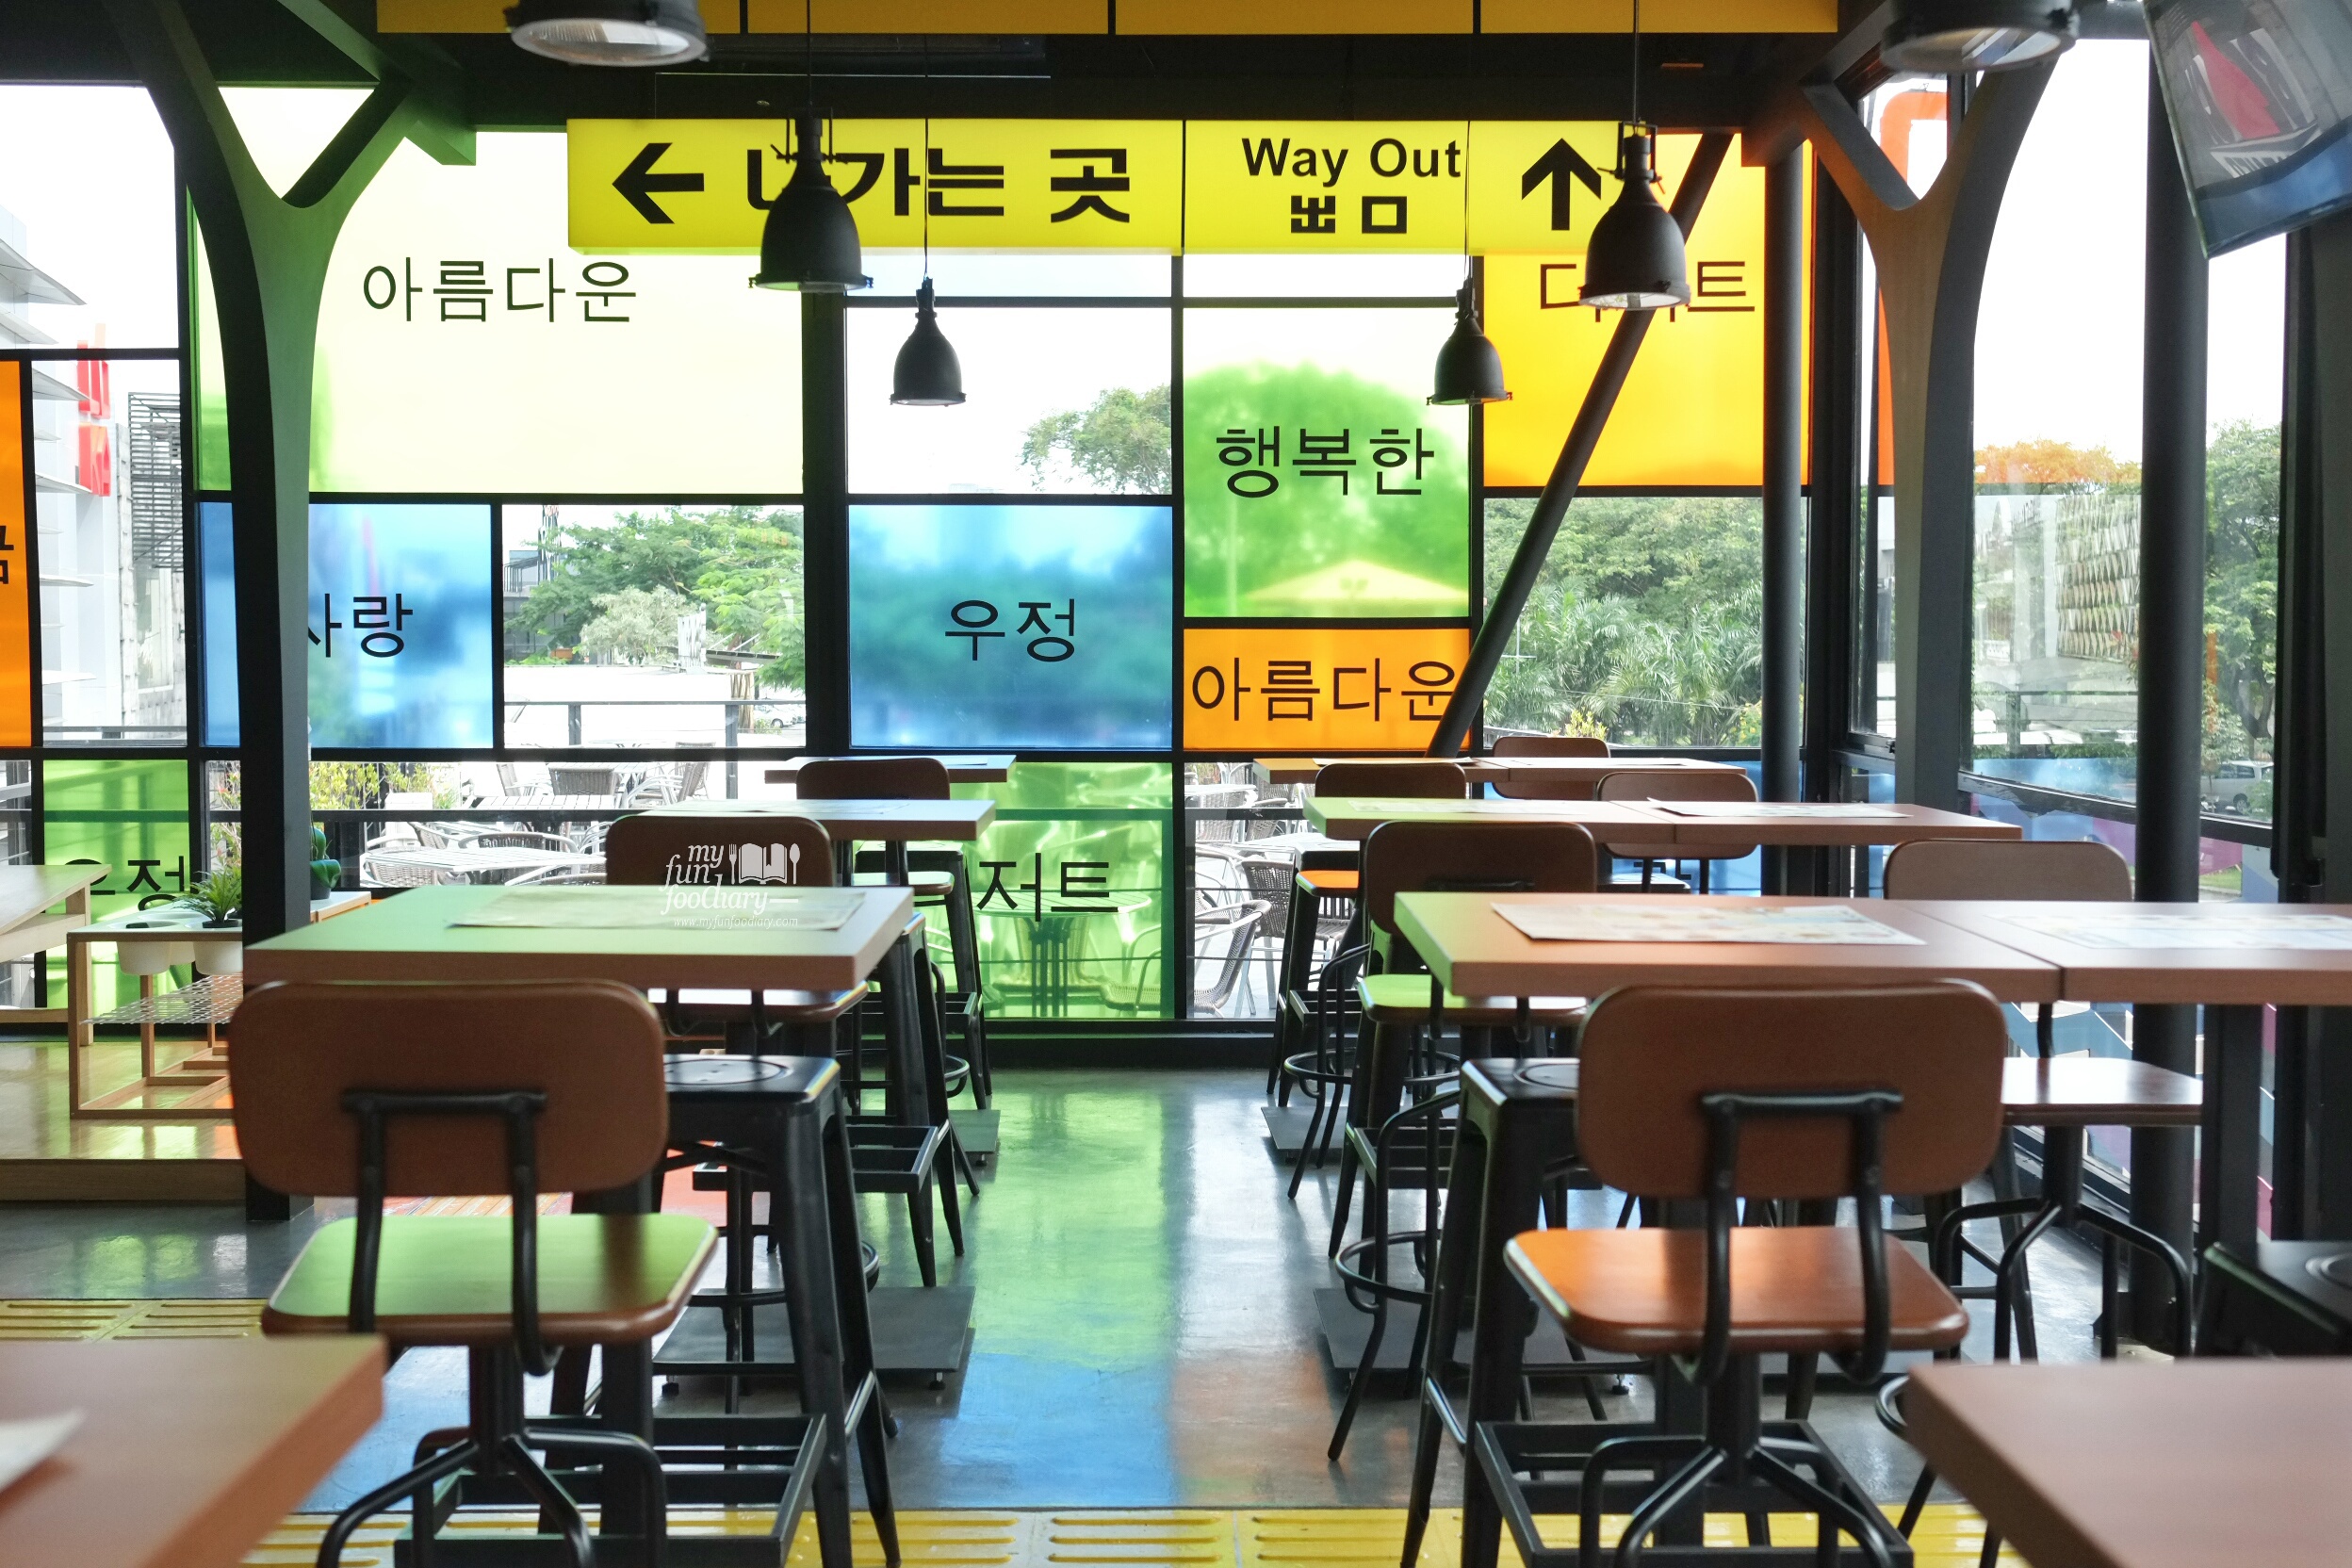 Interiors at Pat Bing Soo Korean Dessert House by Myfunfoodiary